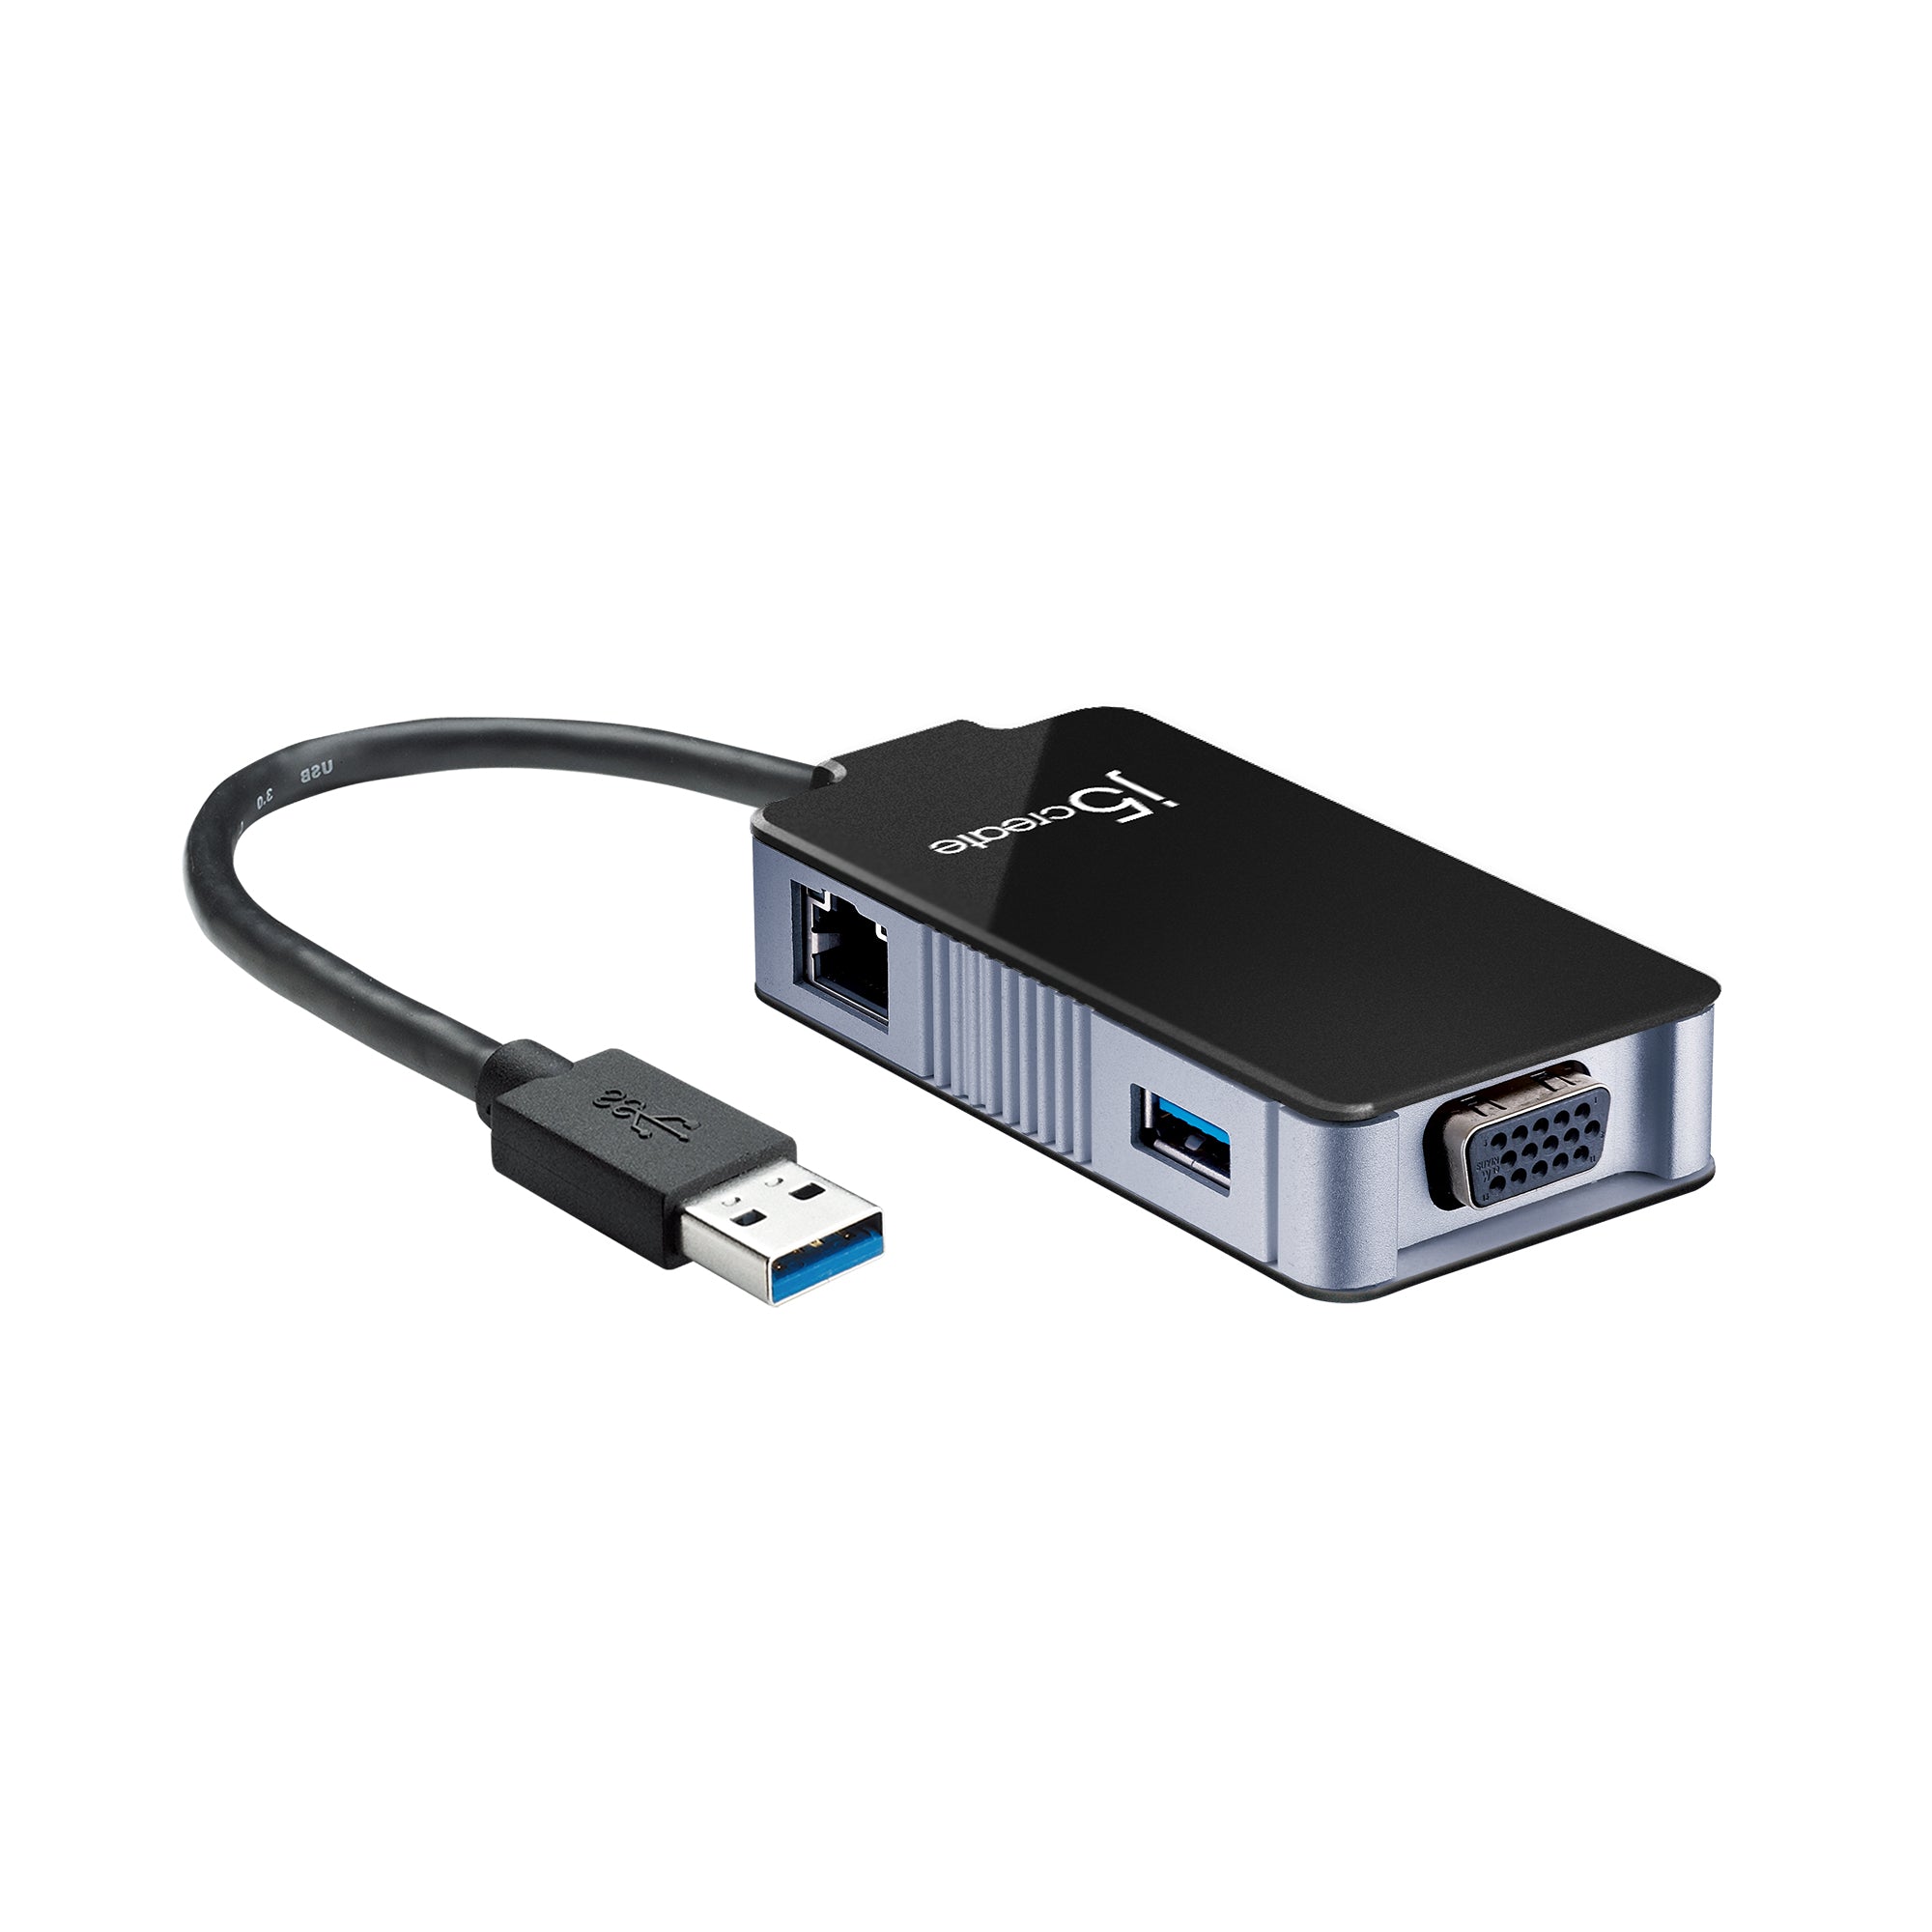 USB 3.0 Multi-Adapter VGA & Gigabit Ethernet – j5create